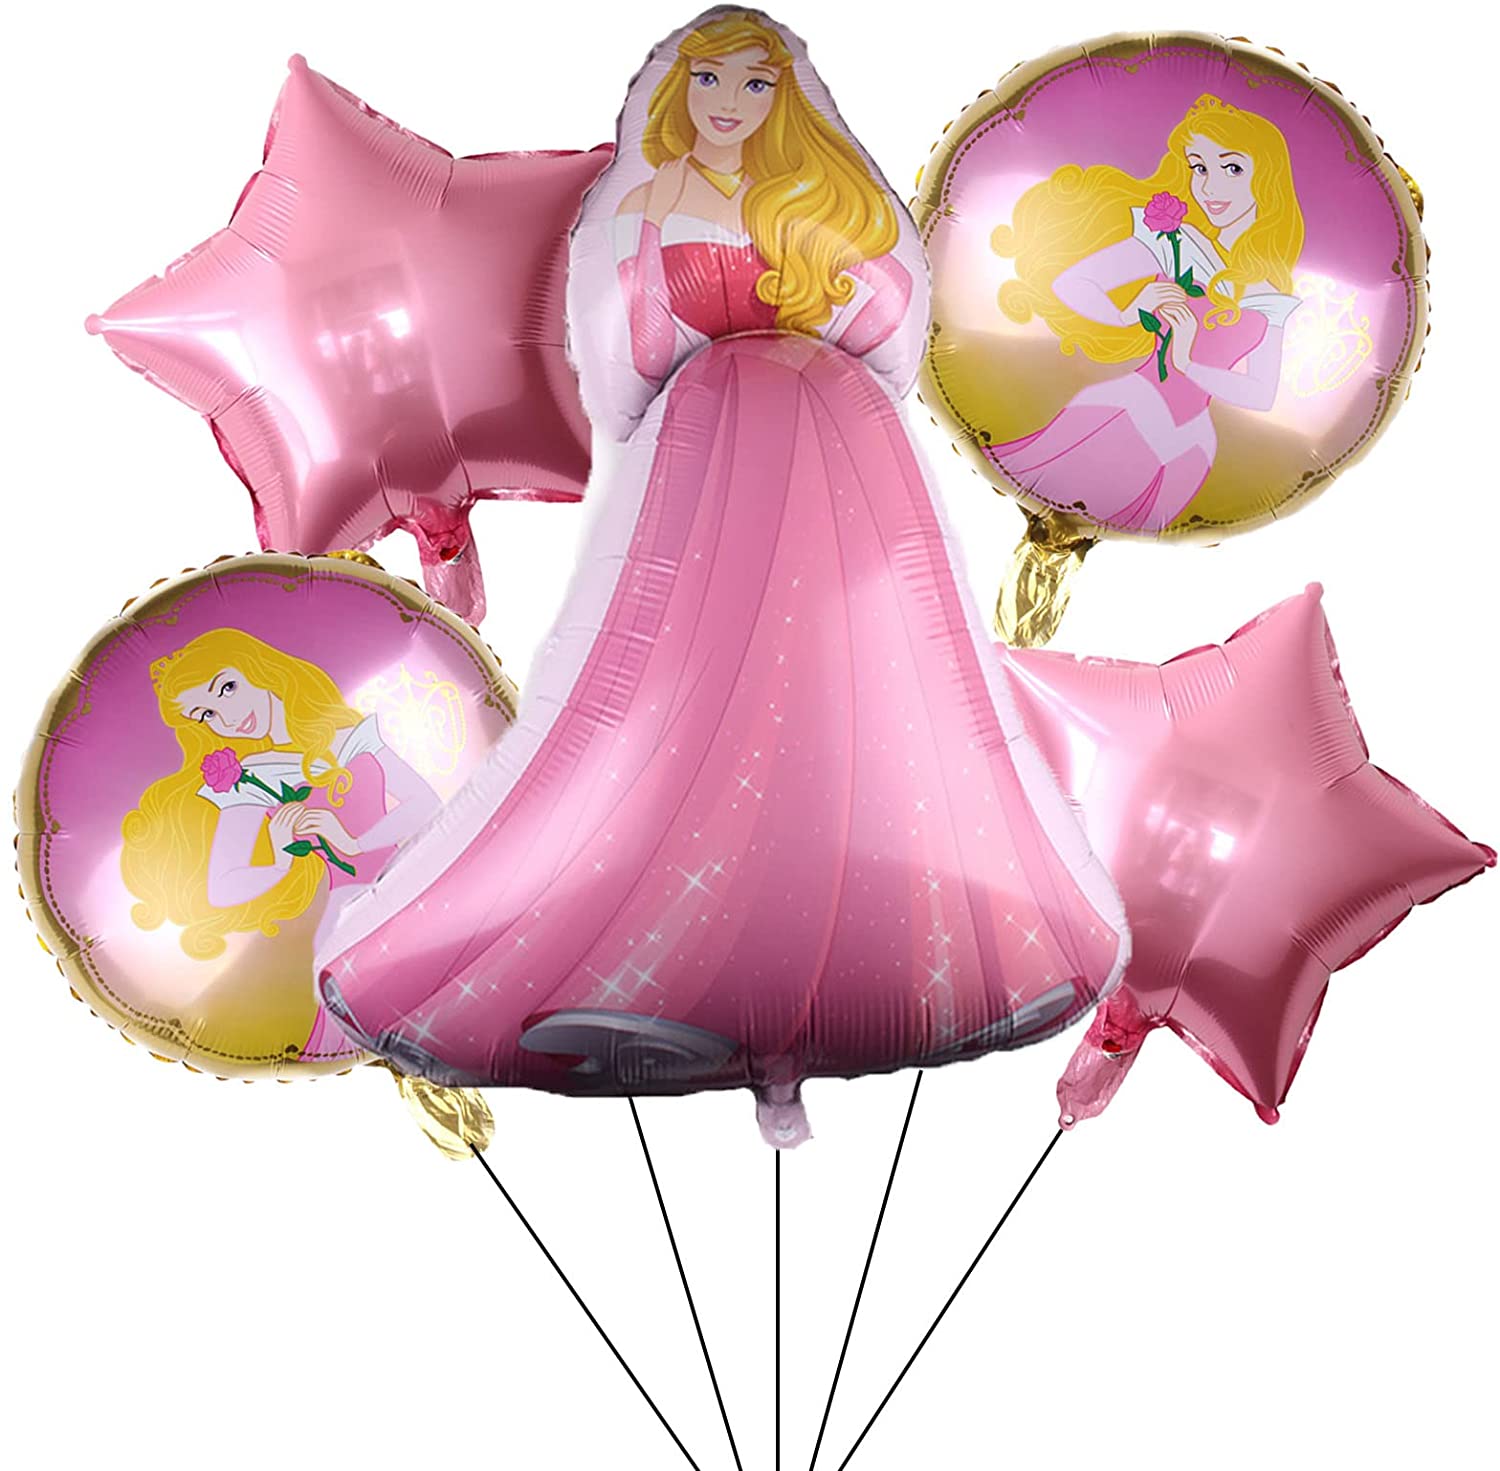 Sleeping Beauty Princess Foil Balloons Birthday Party Decoration Beauty Girls UK 